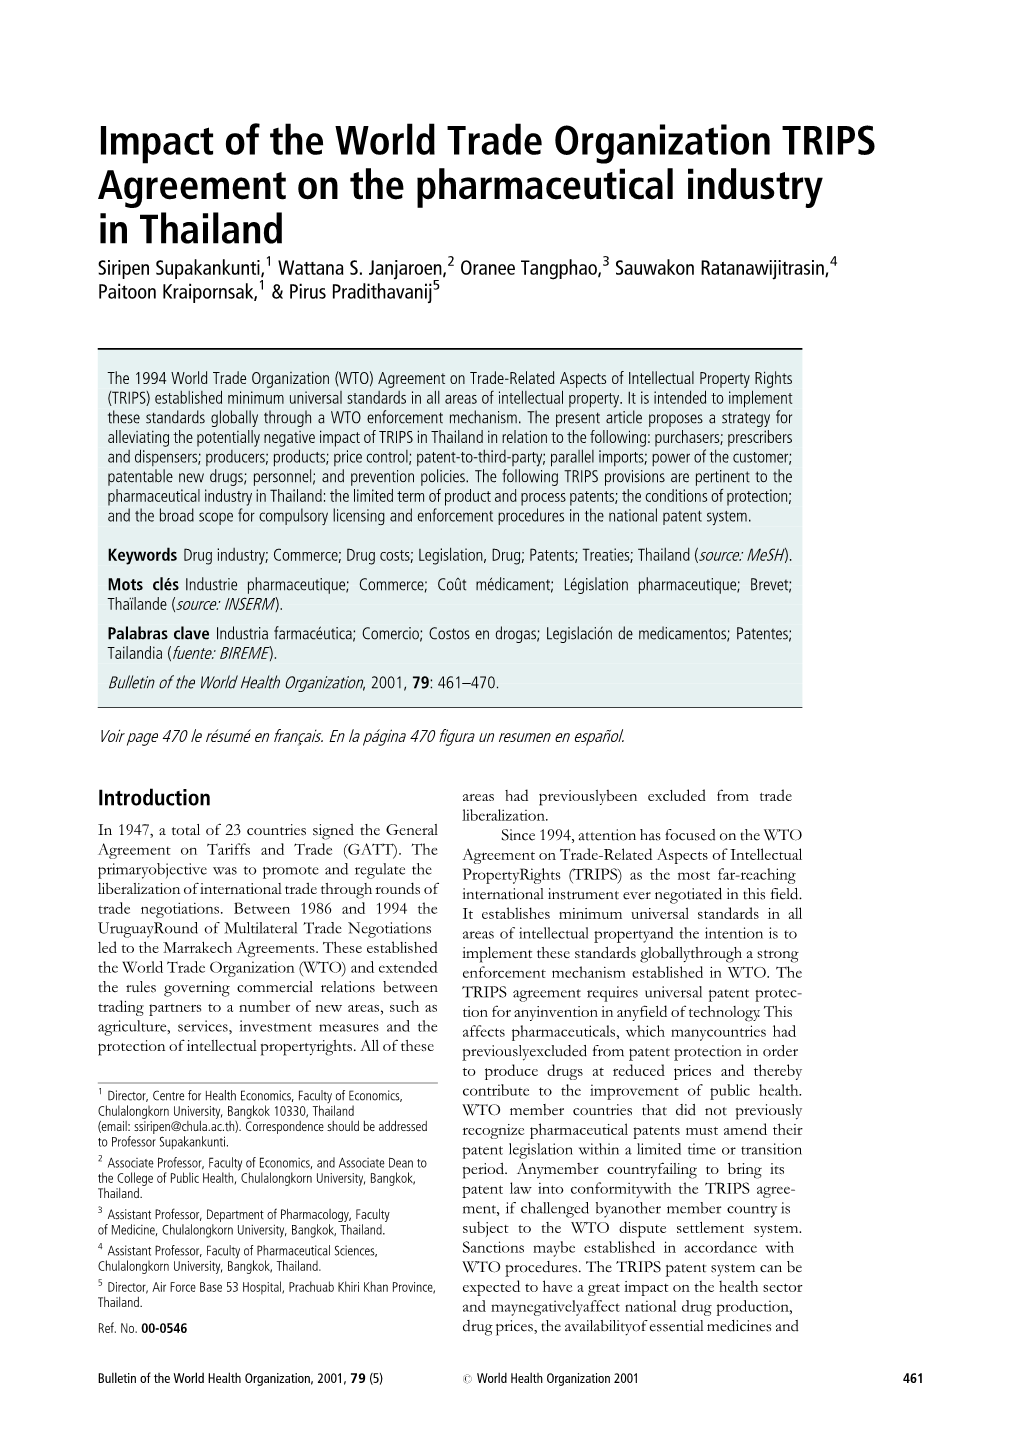 Impact of the World Trade Organization TRIPS Agreement on the Pharmaceutical Industry in Thailand Siripen Supakankunti,1 Wattana S